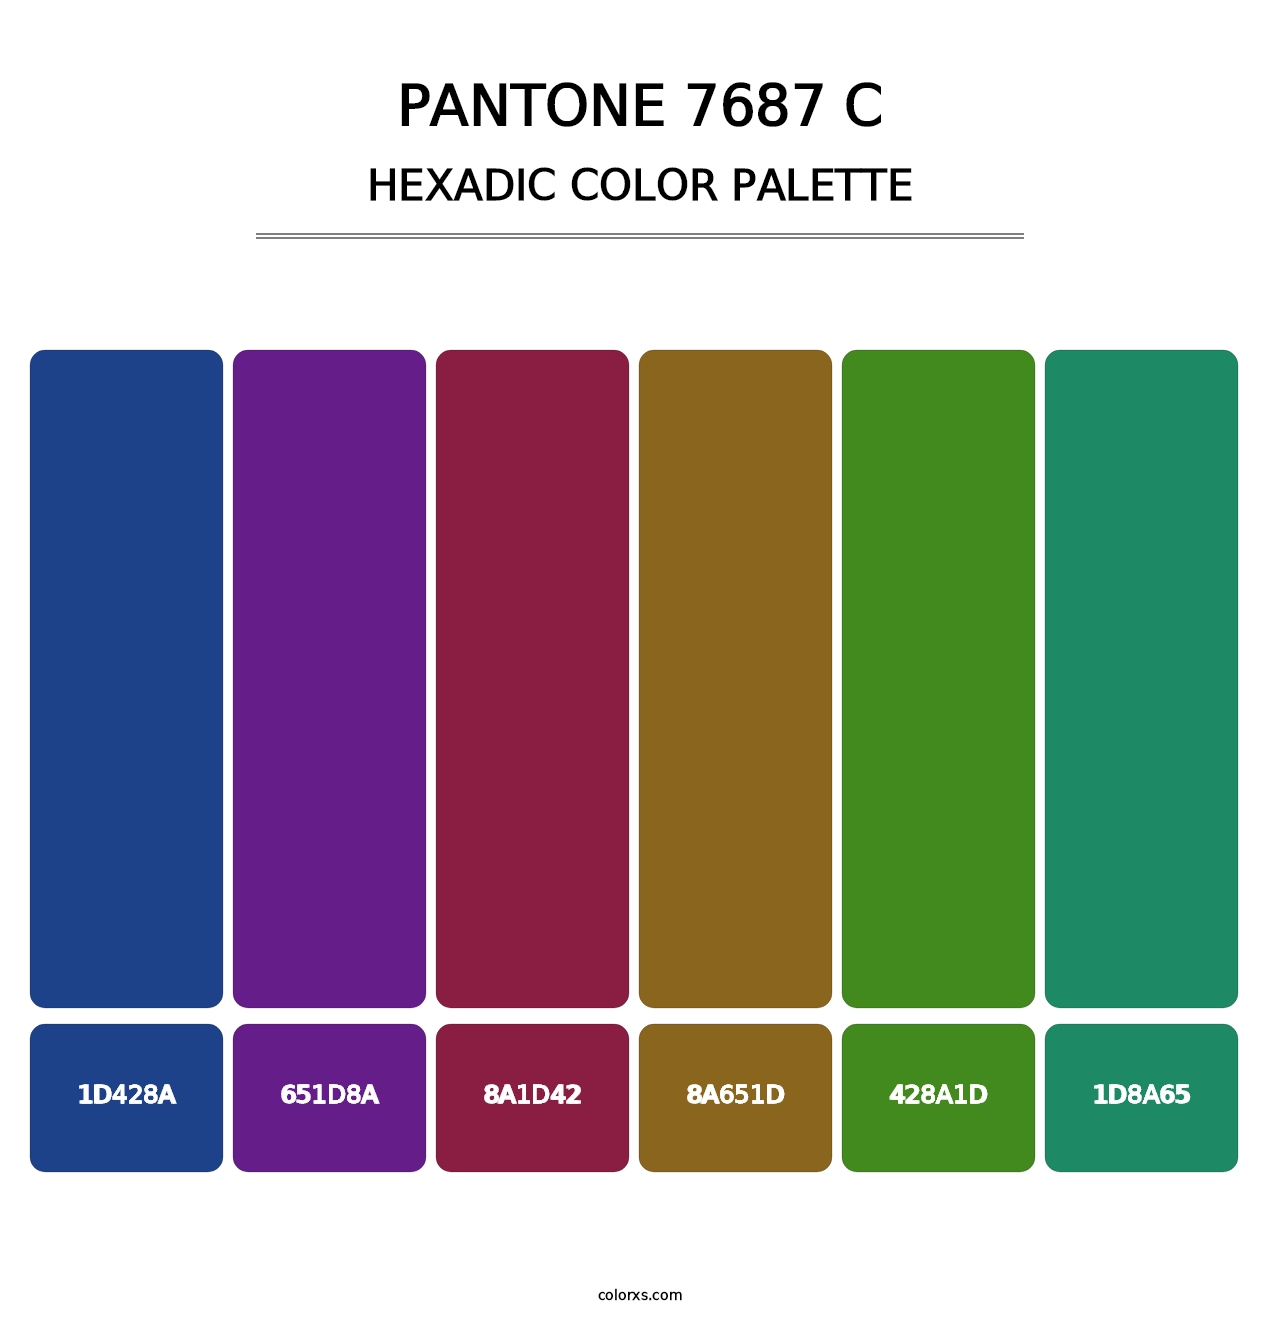 PANTONE 7687 C - Hexadic Color Palette